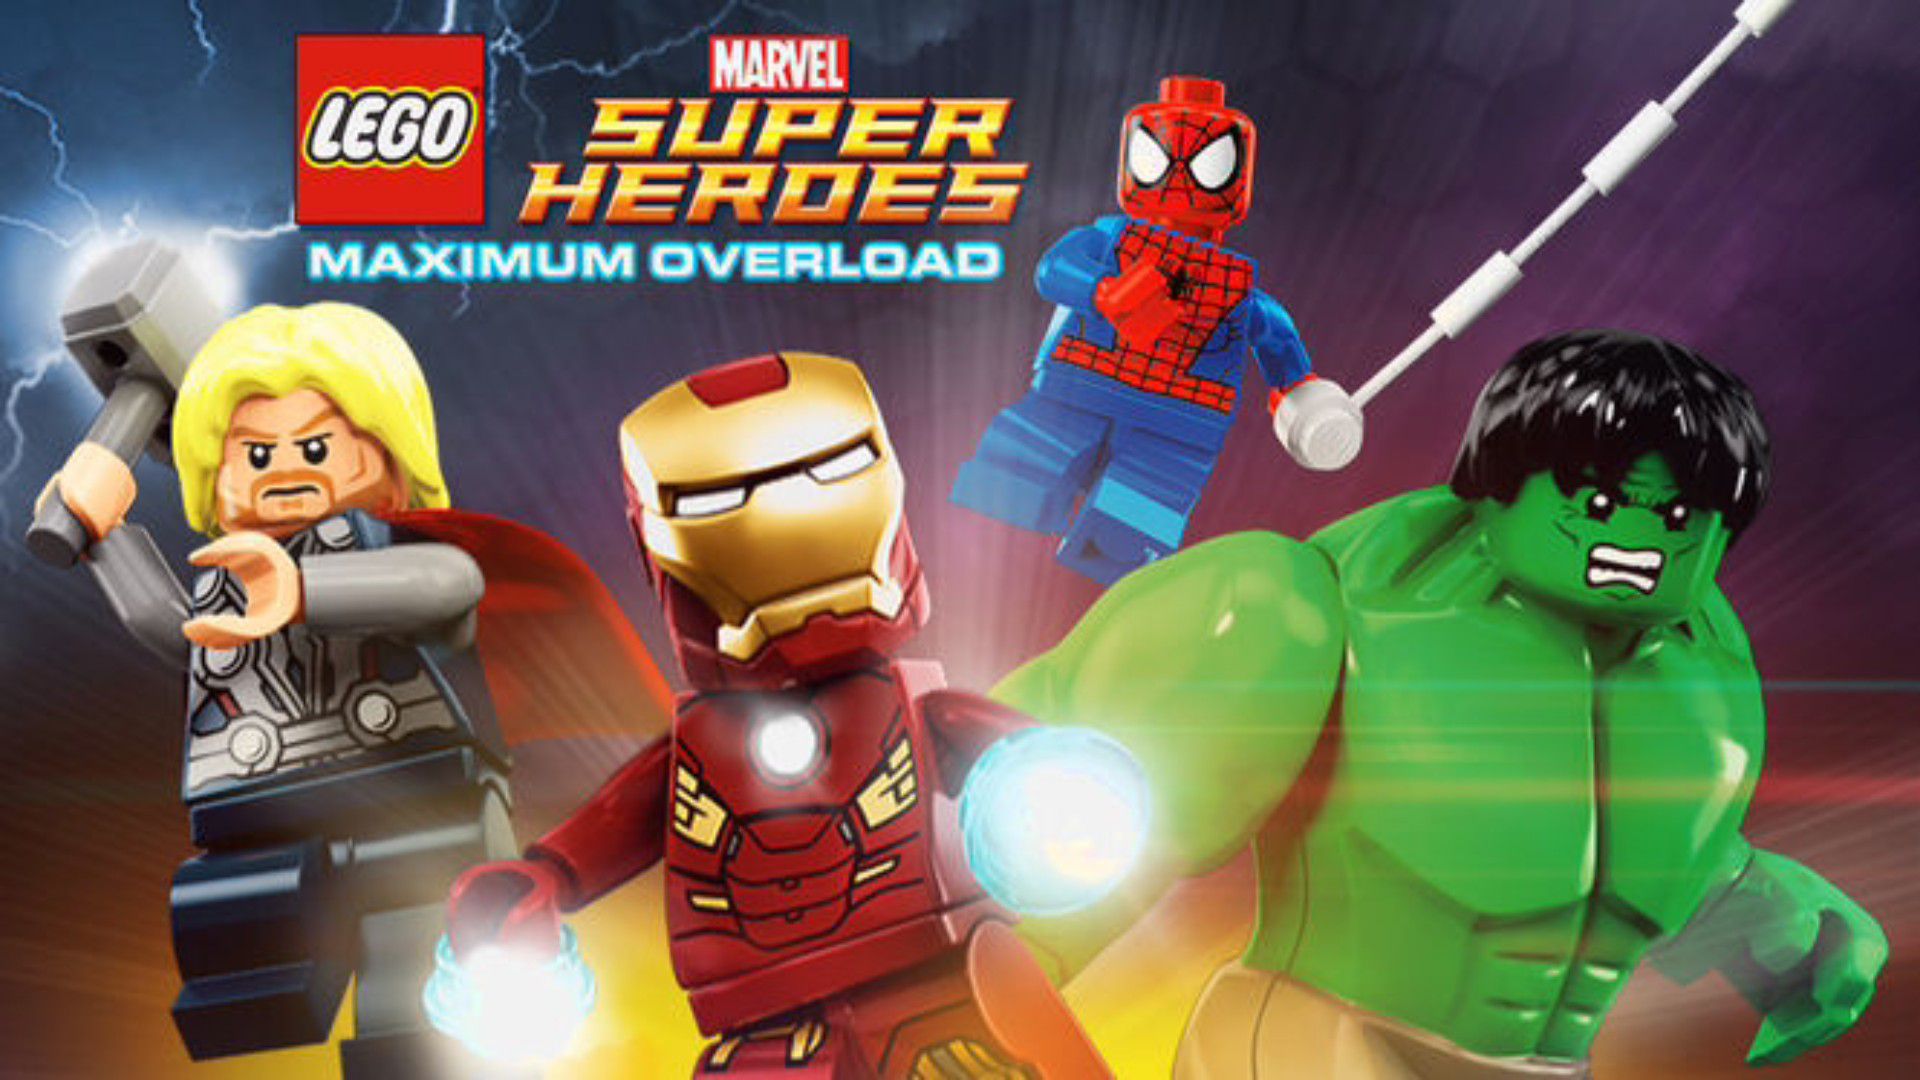 Lego Marvel Super Heroes: Maximum Overload (TV Mini Series 2013) - IMDb